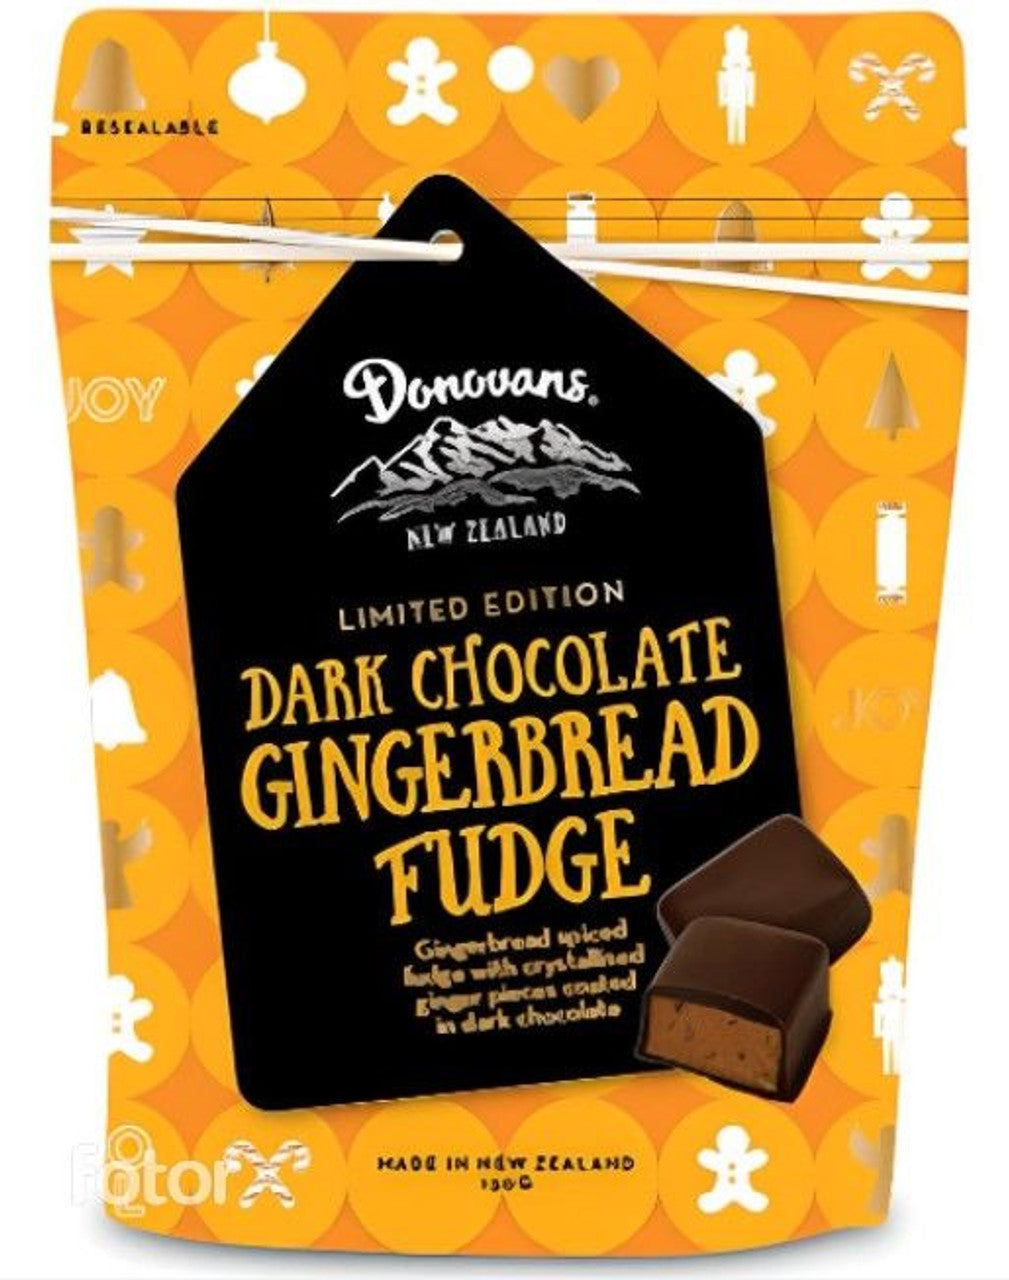 Donovans Limited Edition Gingerbread Fudge Dark Chocolate 100g